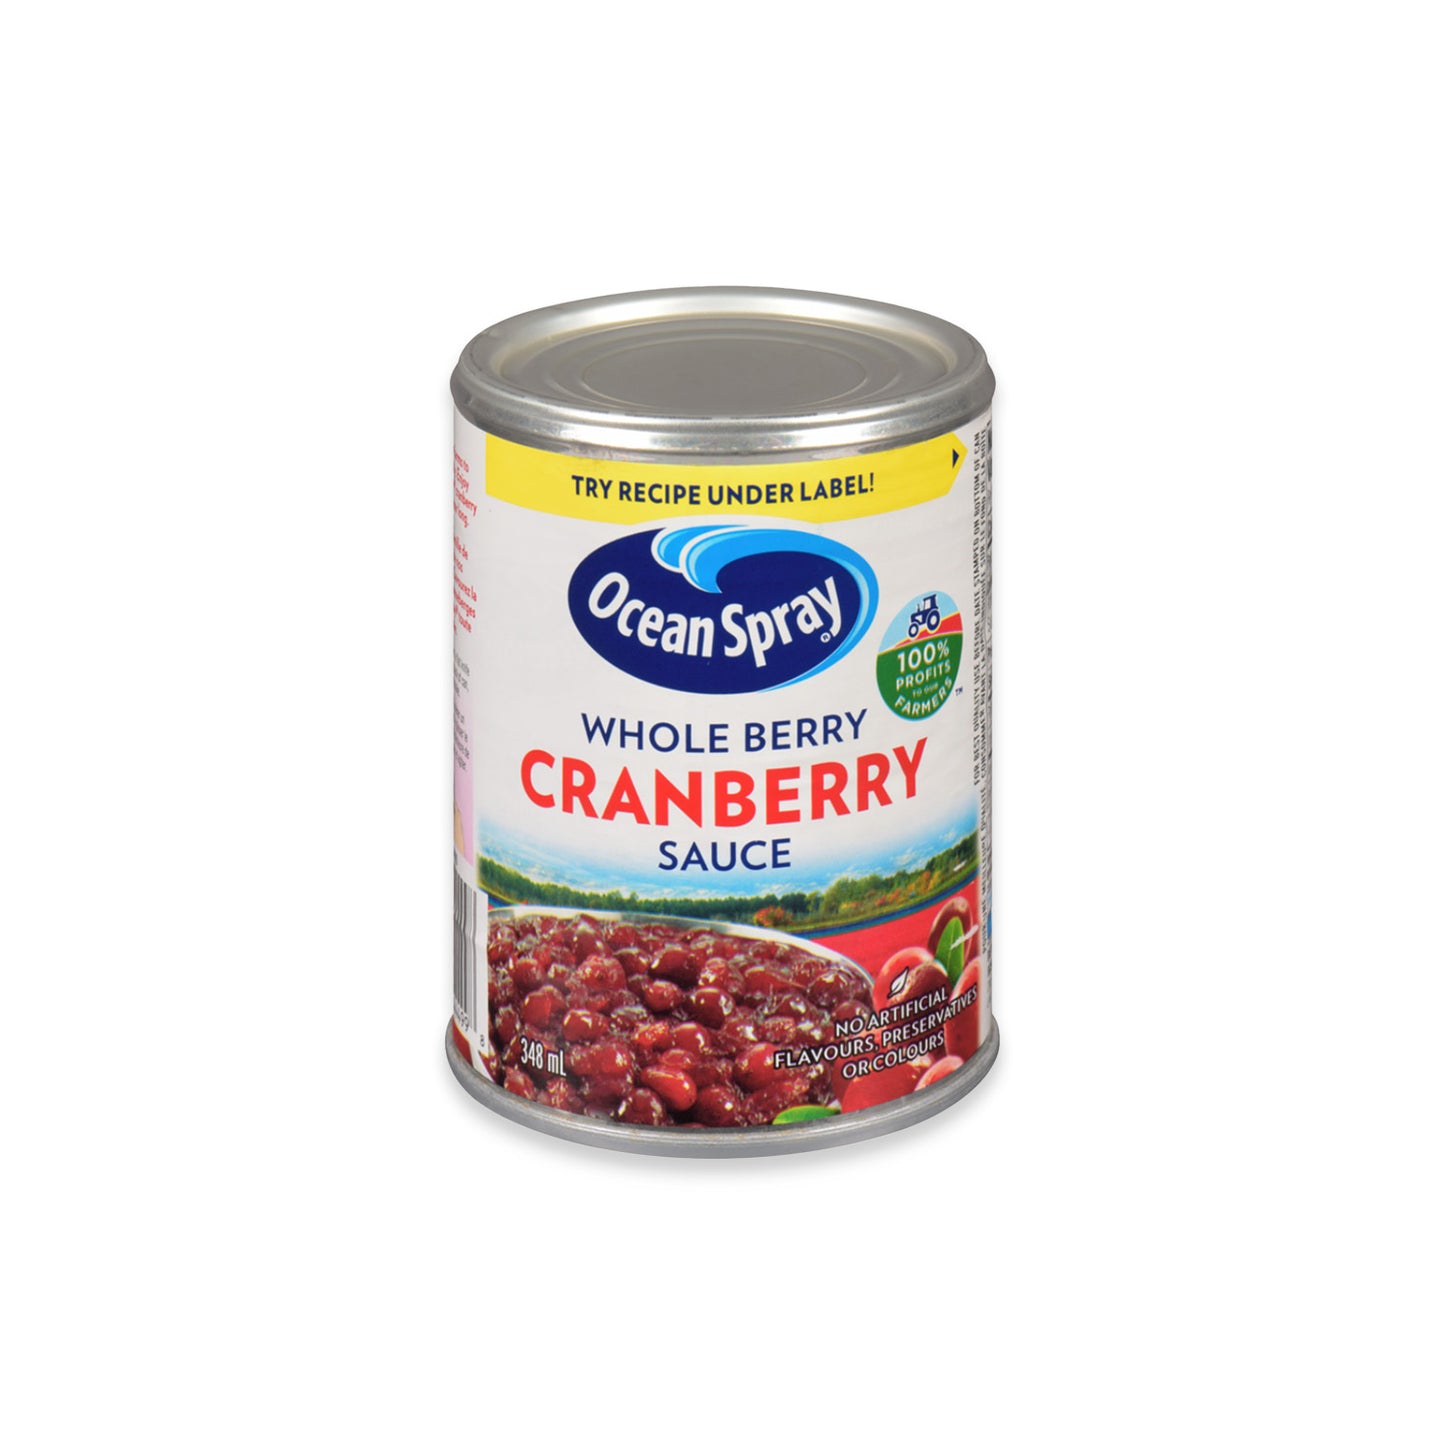 Cranberry Sauce - Ocean Spray (Whole Berry)